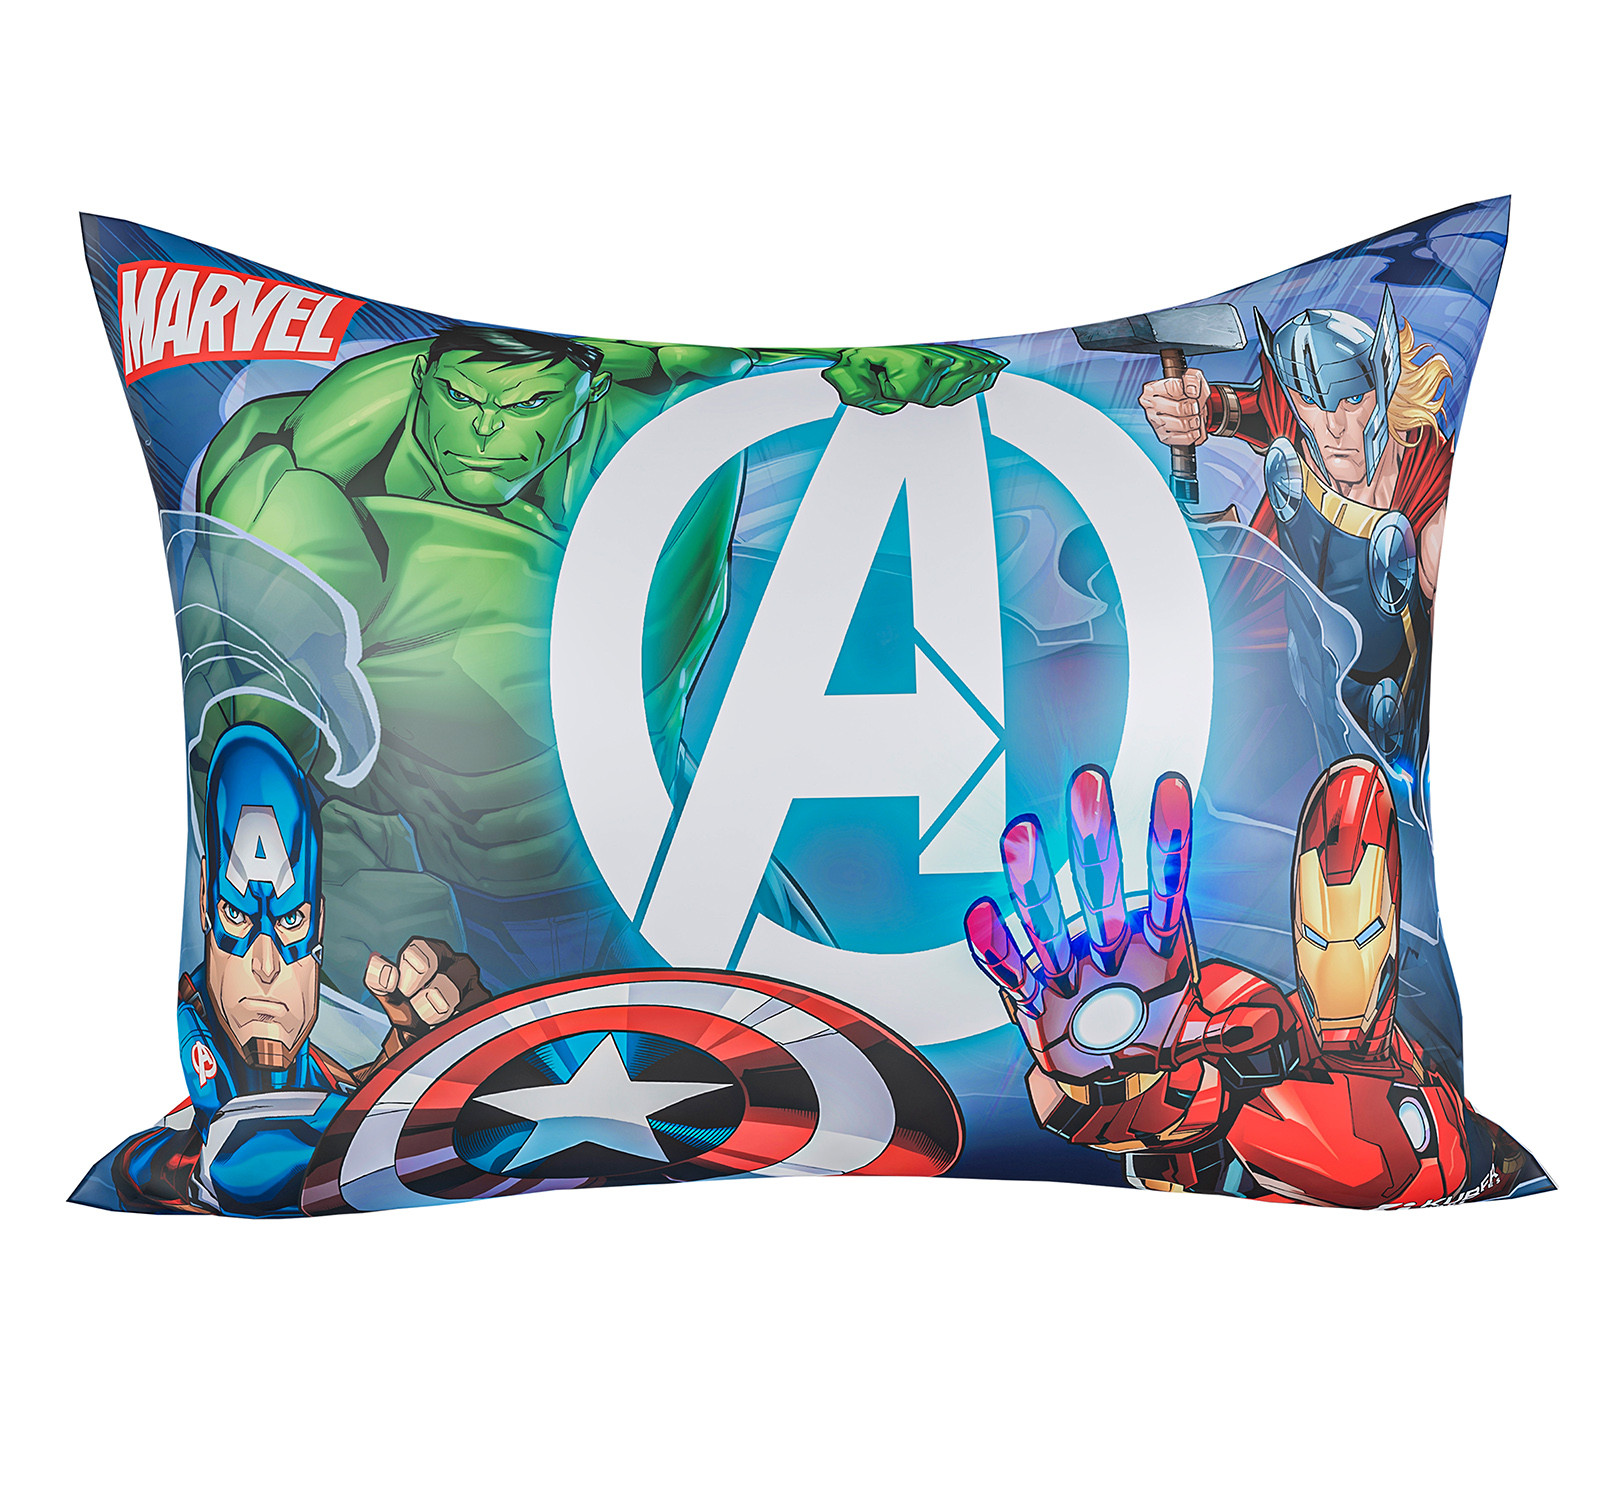 Kuber Industries Marvel Avengers Print Baby Pillow|Polyester Super soft Kids Pillow for Sleeping & Travel,12 x 18 Inch,(Sky Blue)